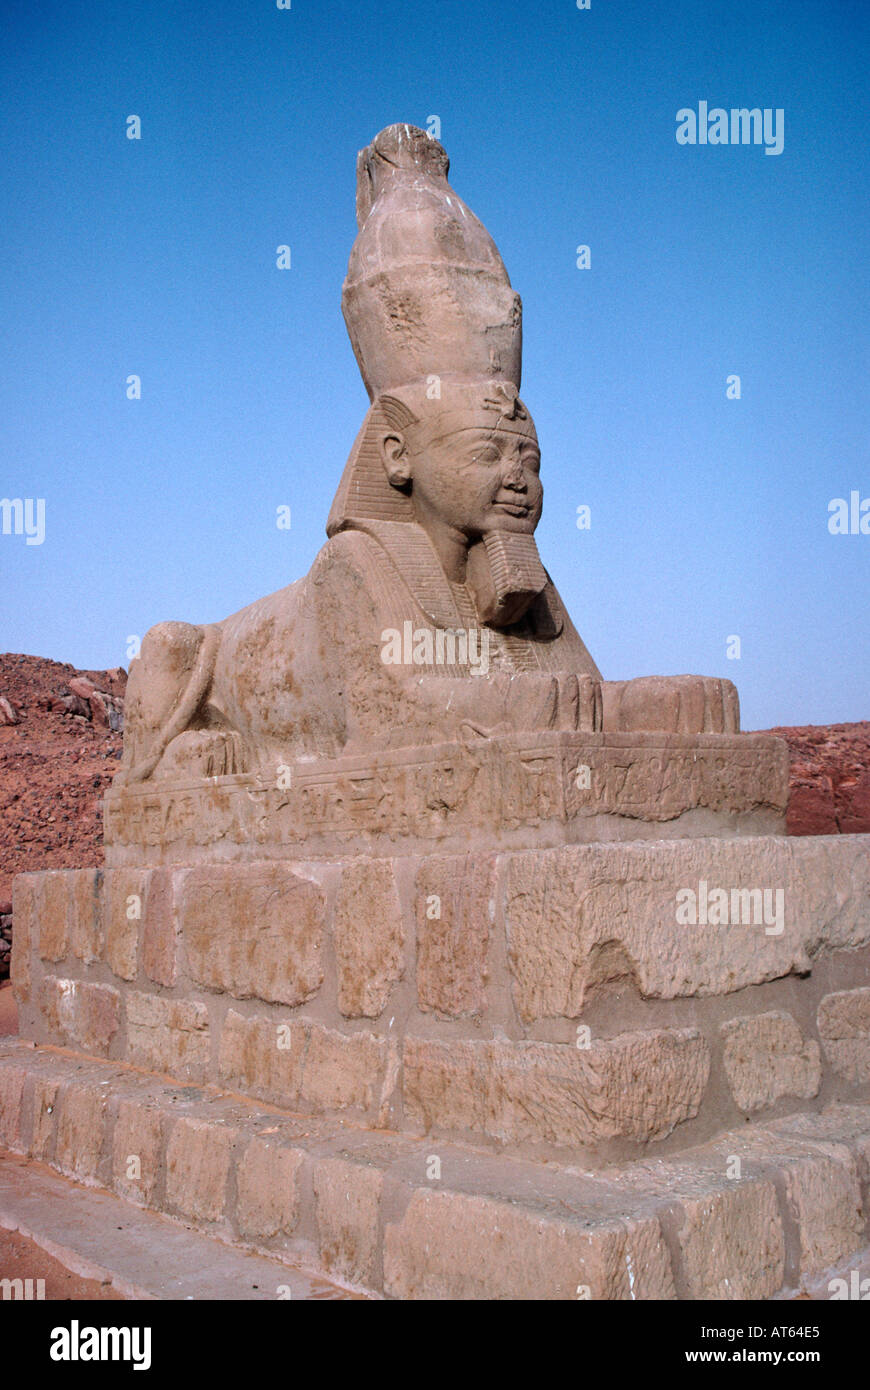 A sphinx. Wadi al-Sebua, New Sebua, Upper Egypt, Egypt. A sphinx at Wadi al-Sebua in Egypt. Upper Egypt / Nubia, Egypt. A sphinx at Wadi al-Sebua in Egypt. Stock Photo